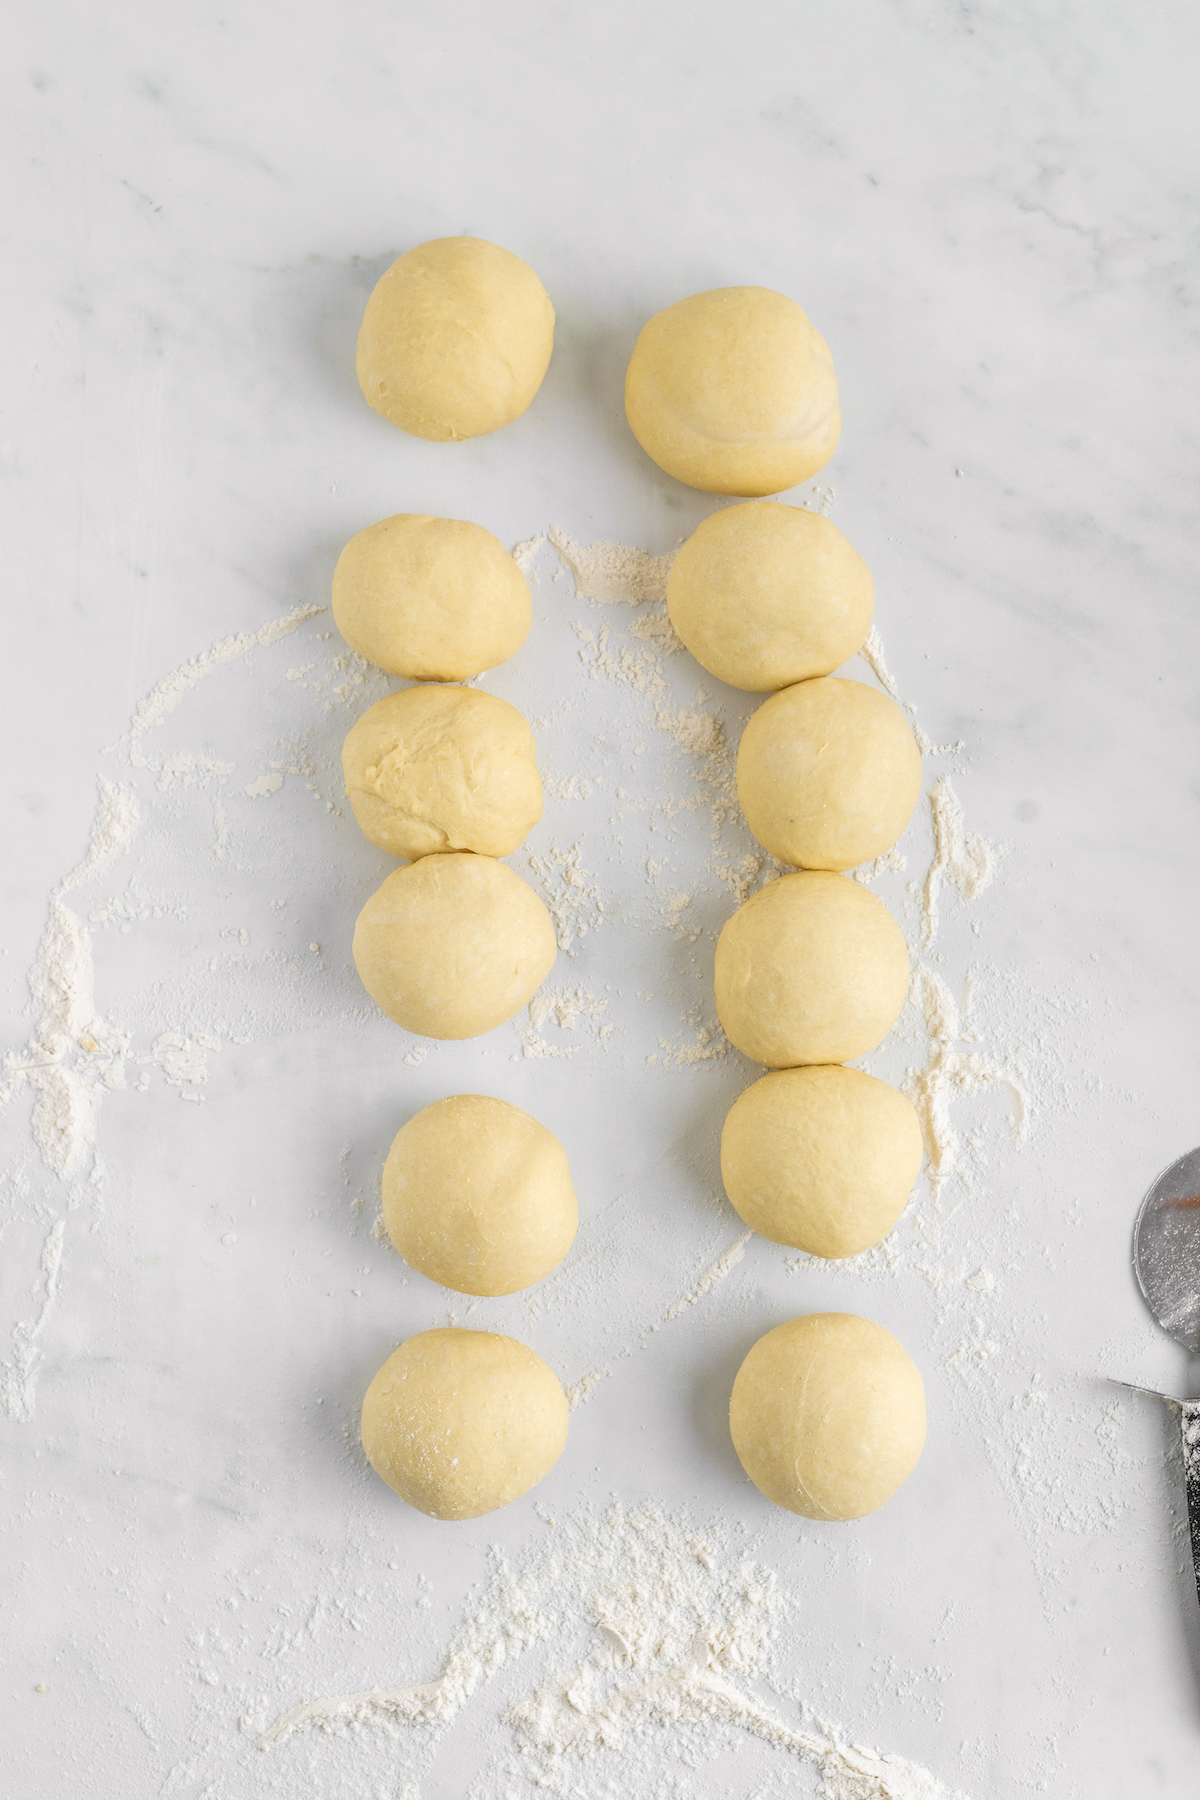 Balls of dough on a floured work surface.